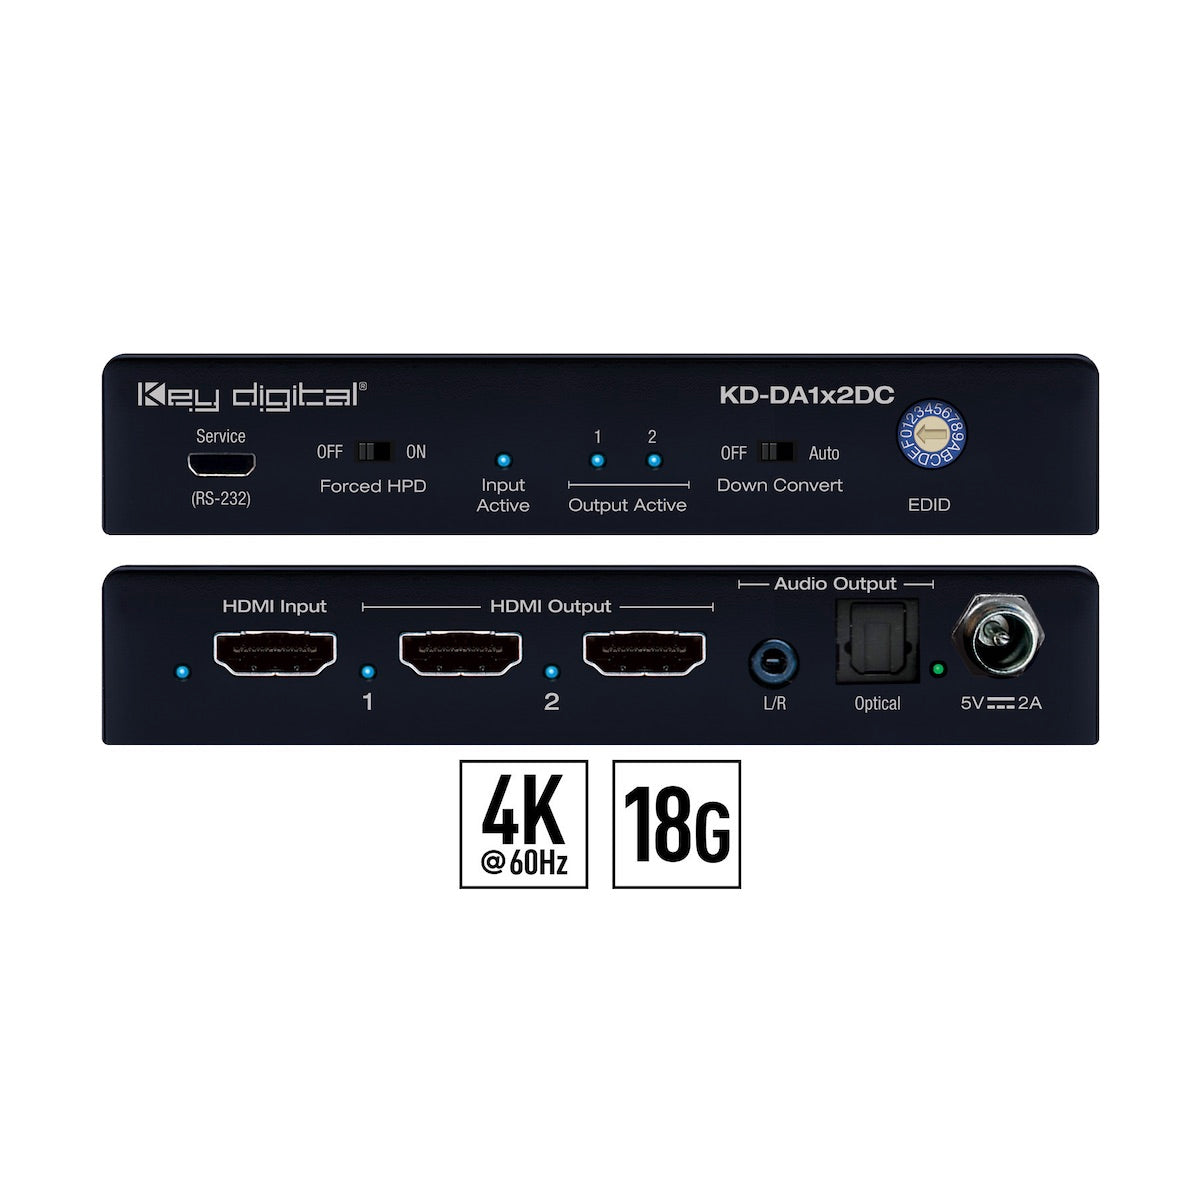 Key Digital KD-DA1x2DC - 1x2 4K/18G HDMI Distribution Amplifier, front and rear views